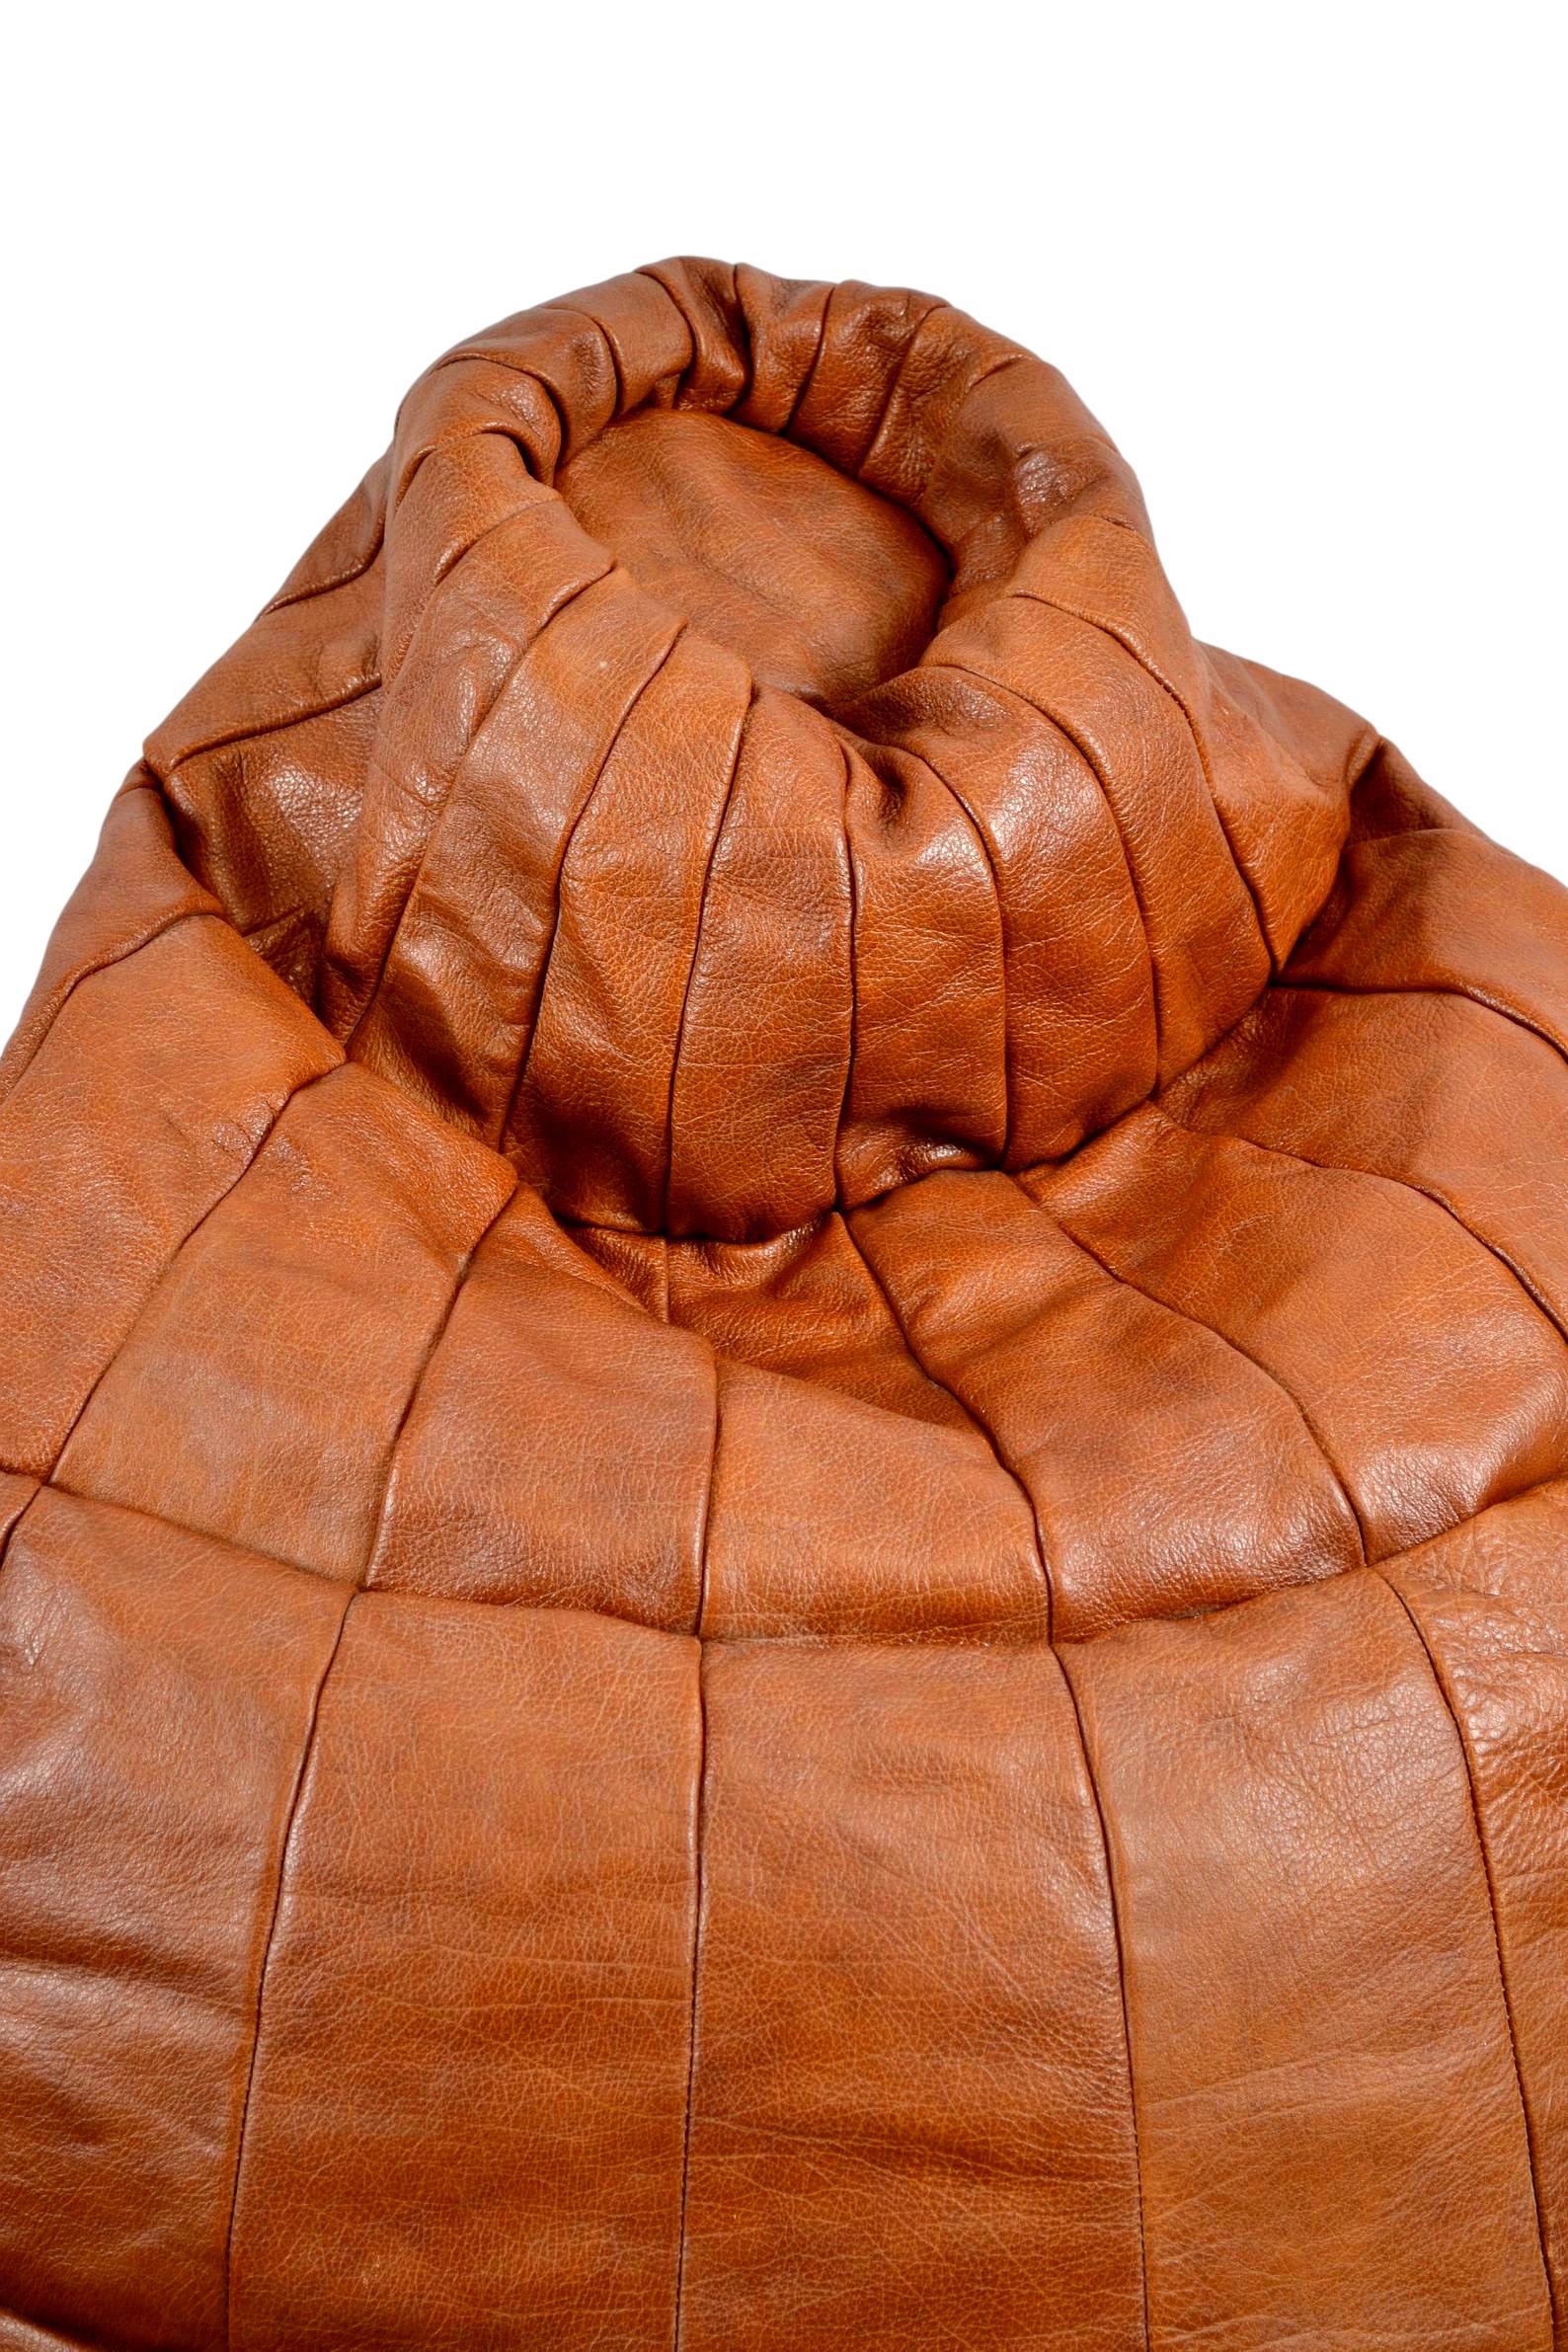 De Sede Patchwork Leather Bean Bag In Good Condition In Los Angeles, CA